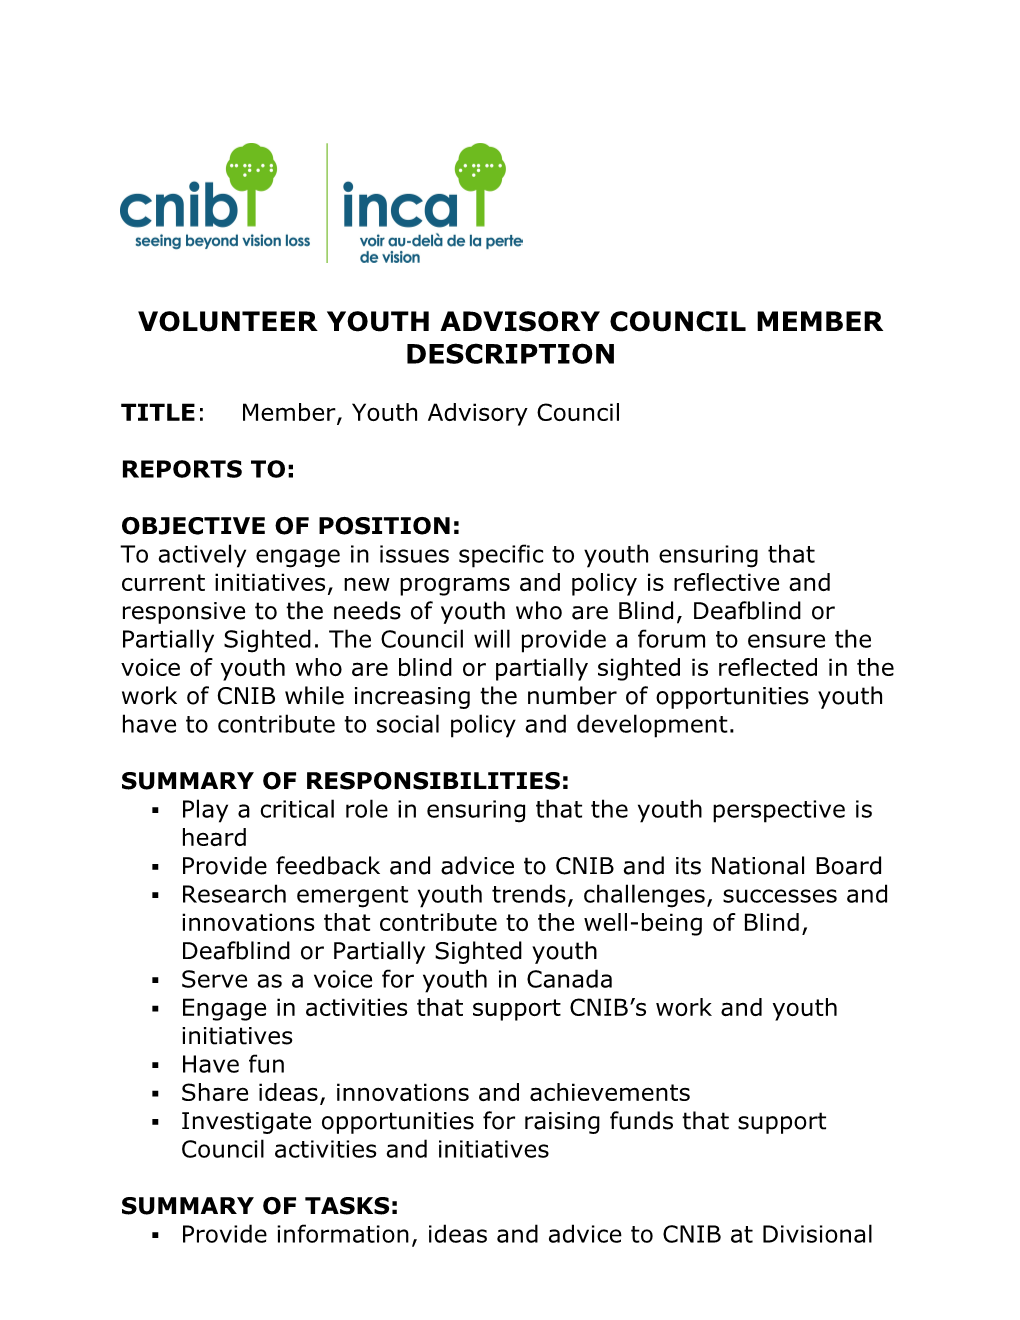 Volunteer Youth Advisory Council Member Description